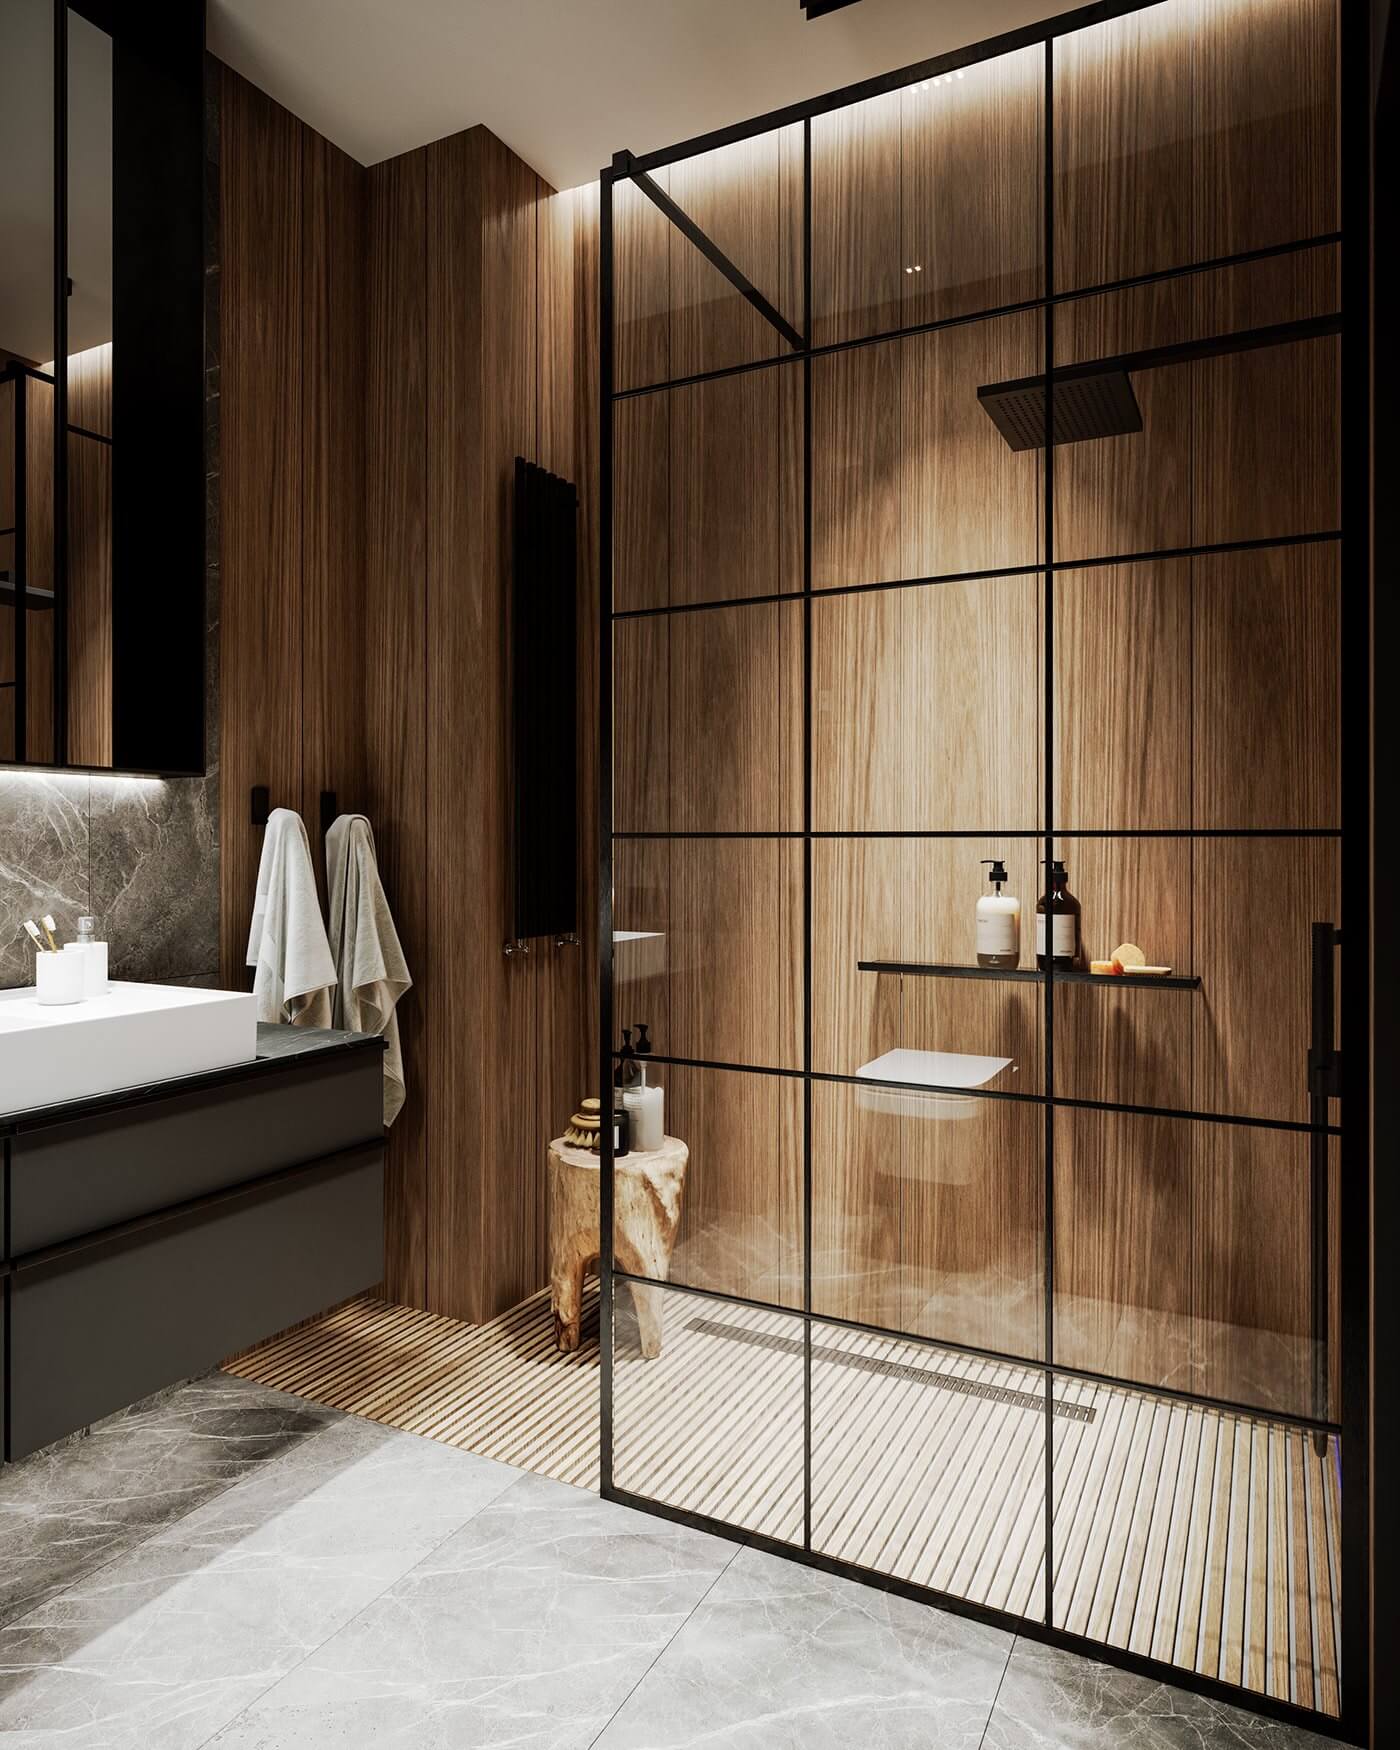 Pechersky Apartment bathroom wood wall - cgi visualization